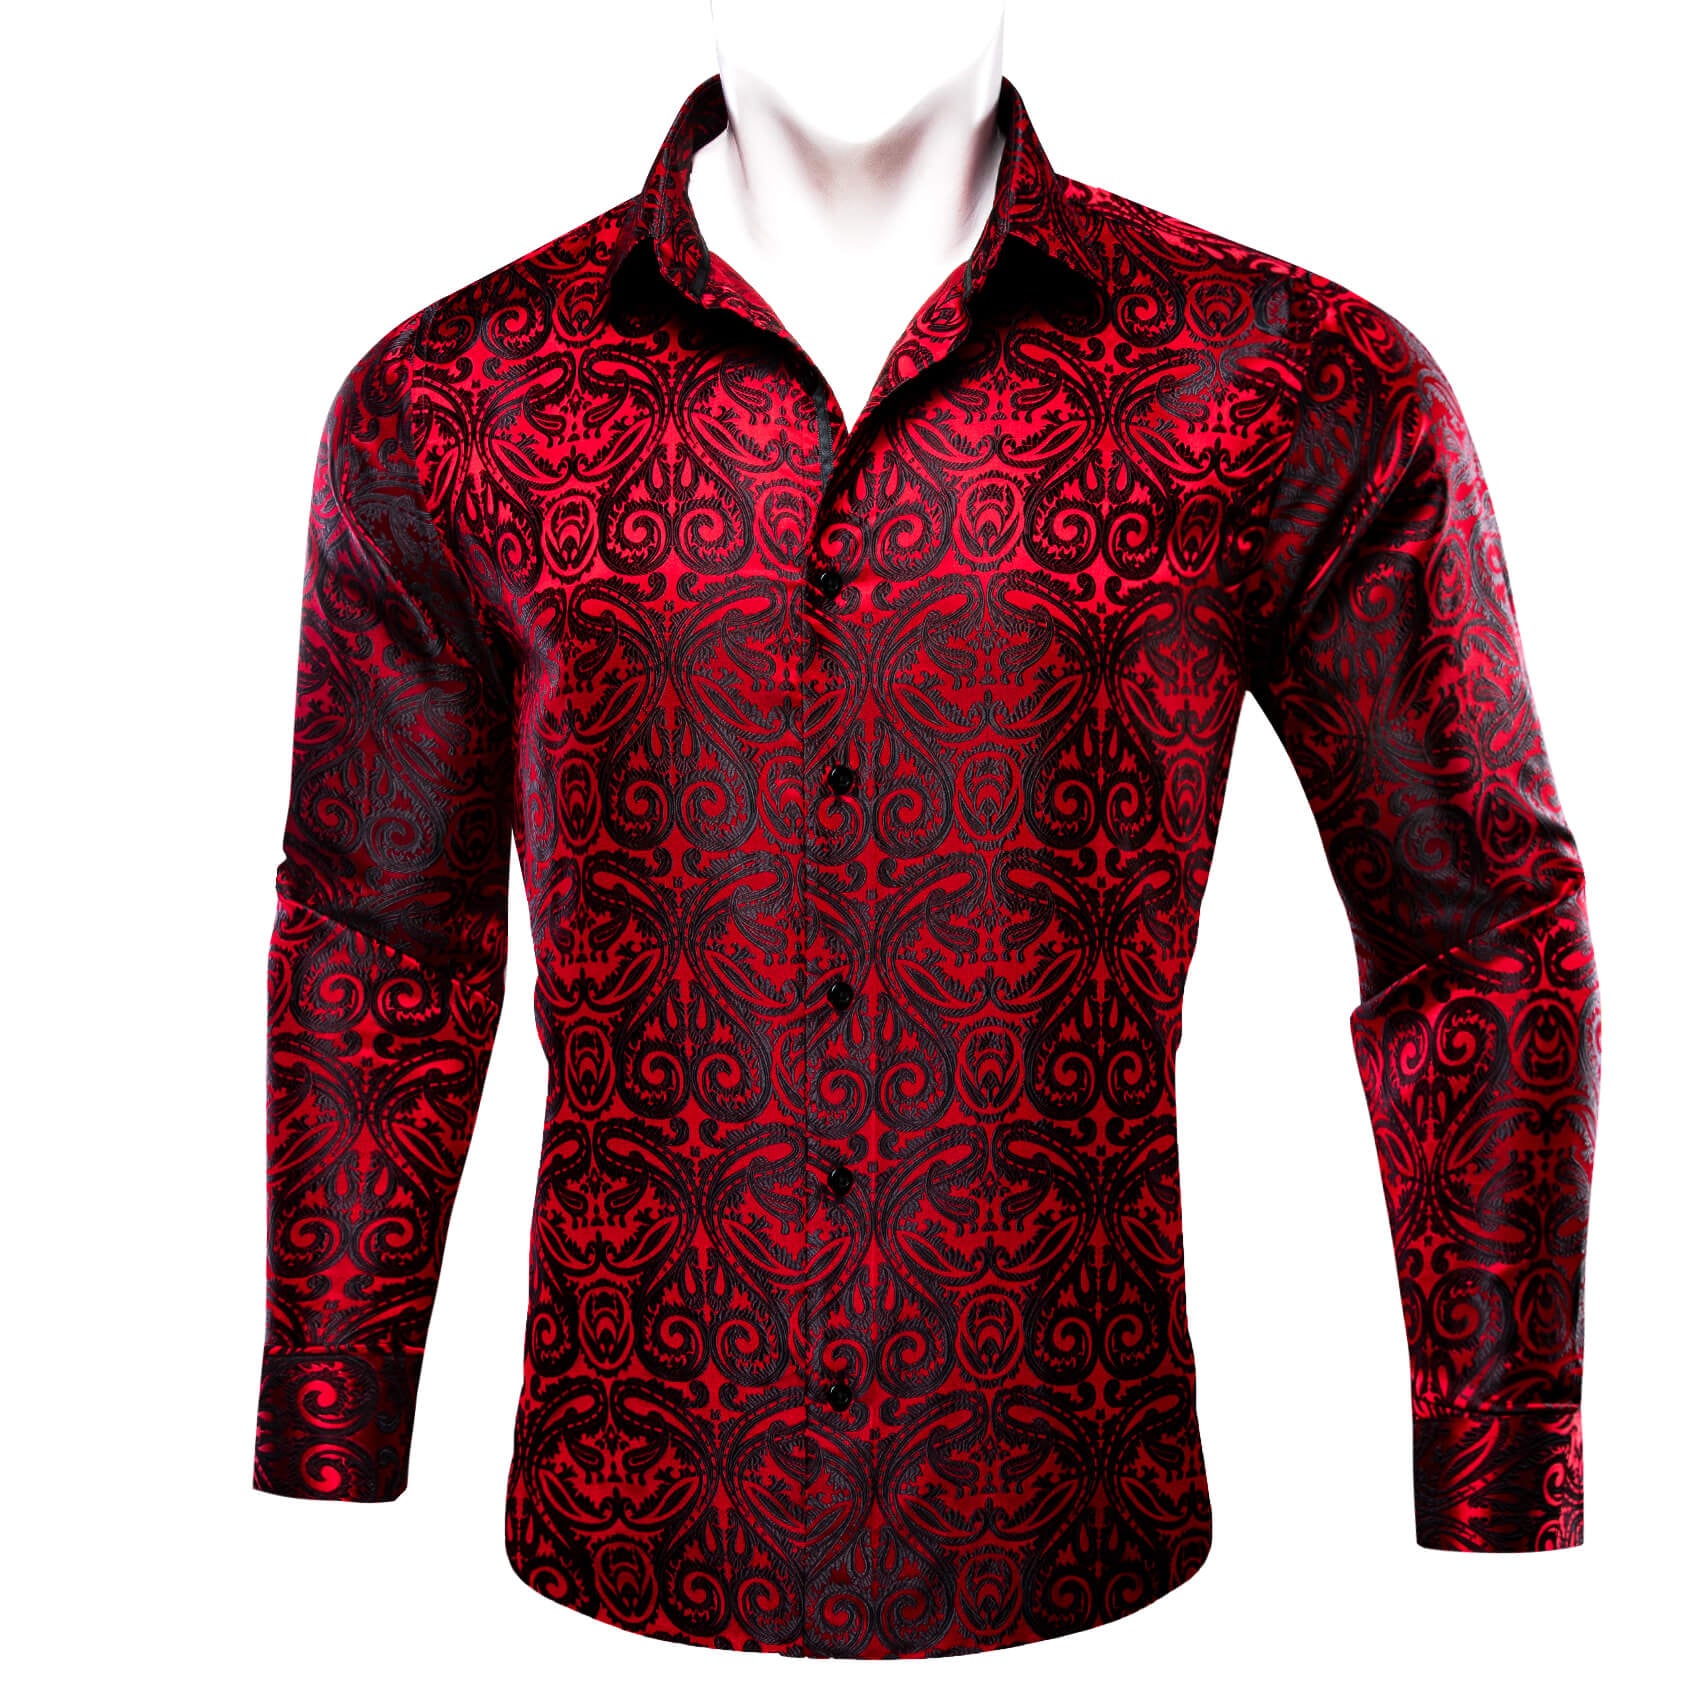 Black Red affordable dress shirts